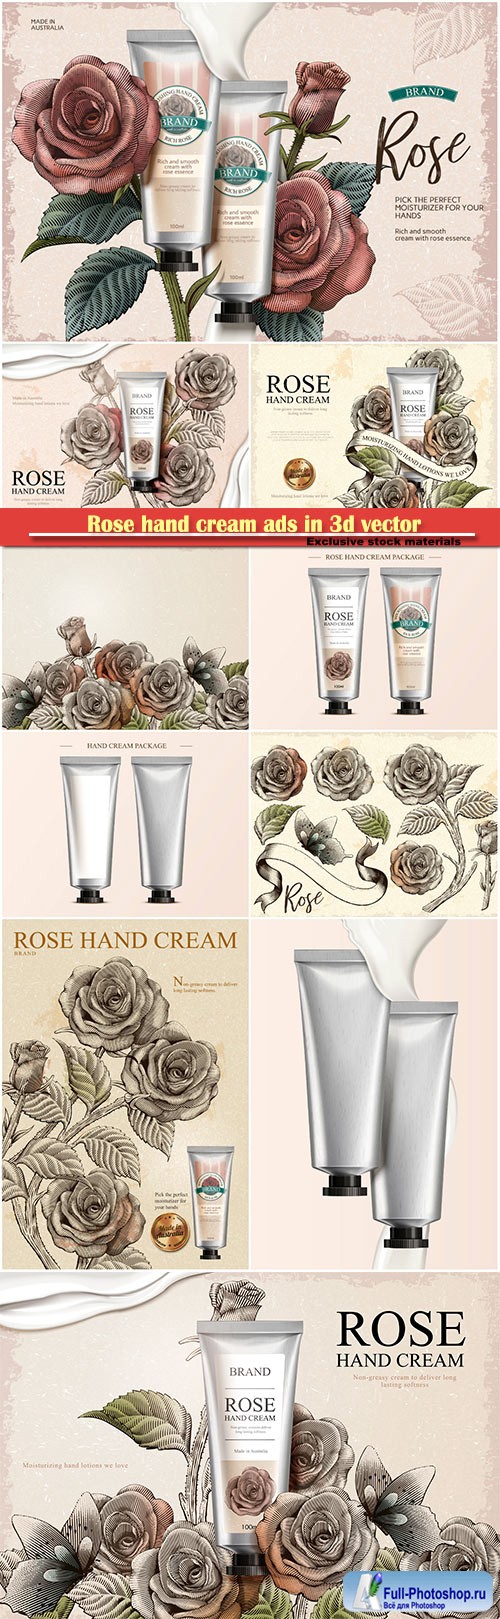 Rose hand cream ads in 3d vector illustration